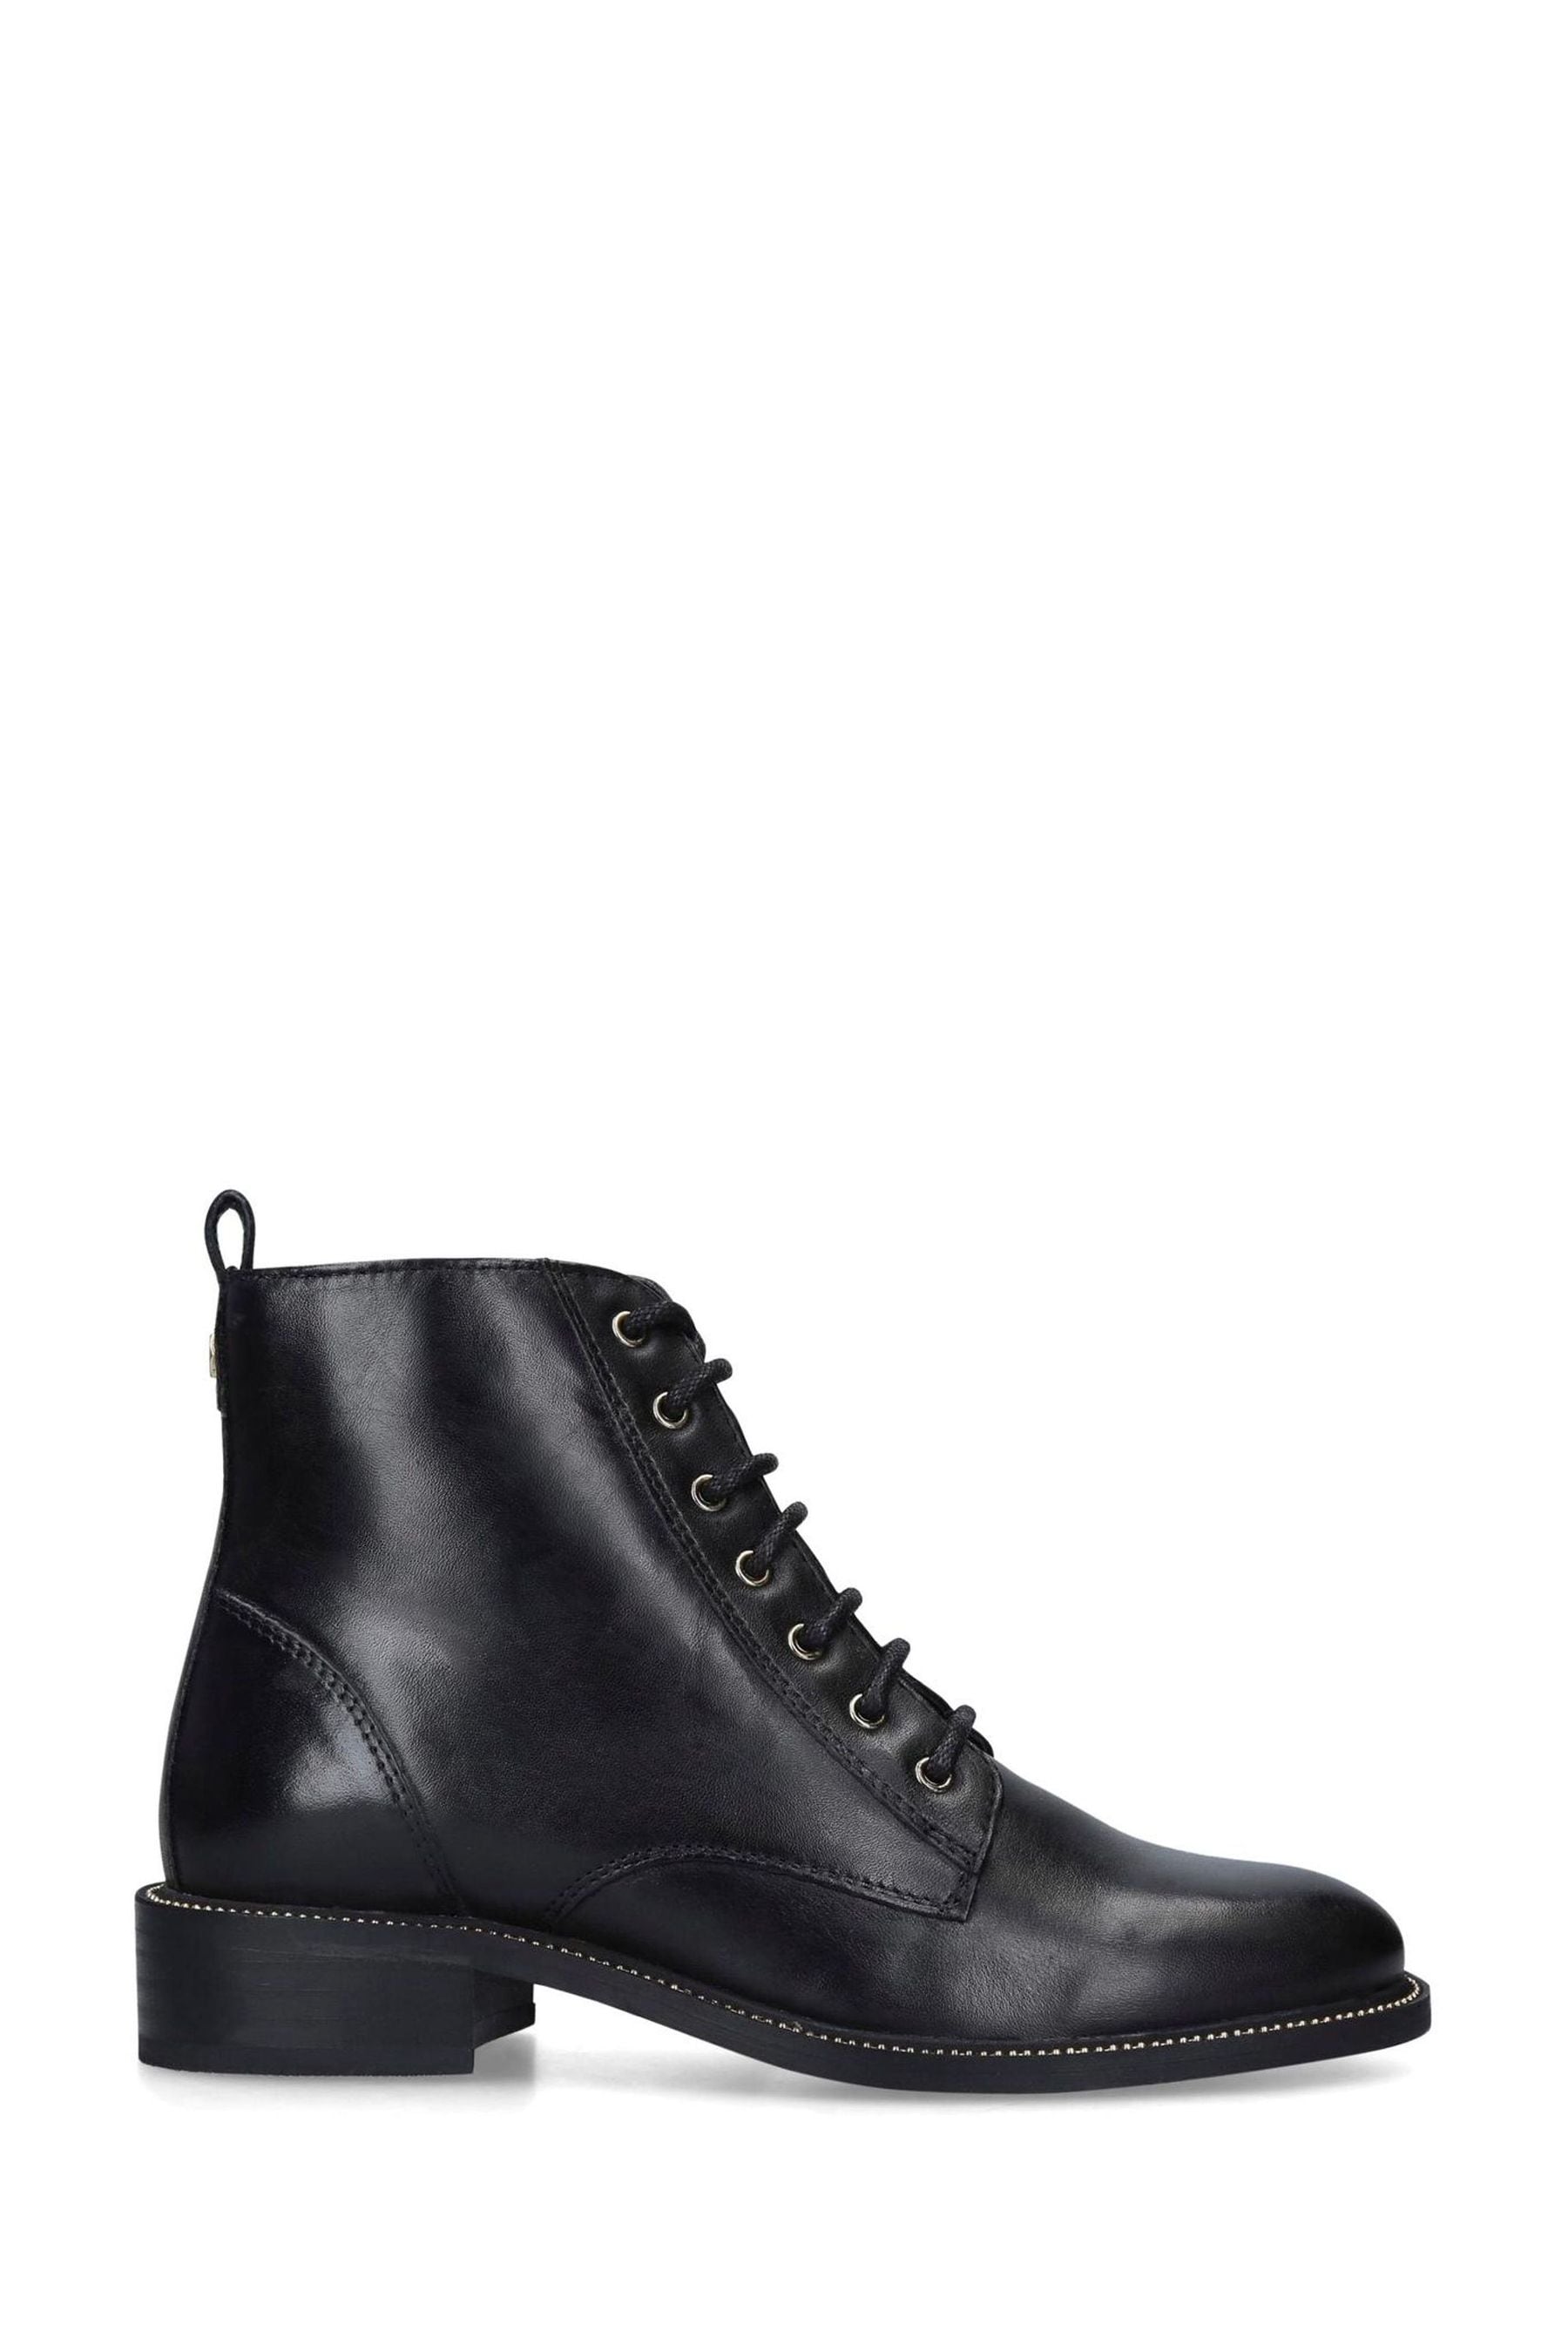 Buy Carvela Black Spike Boots from the Next UK online shop